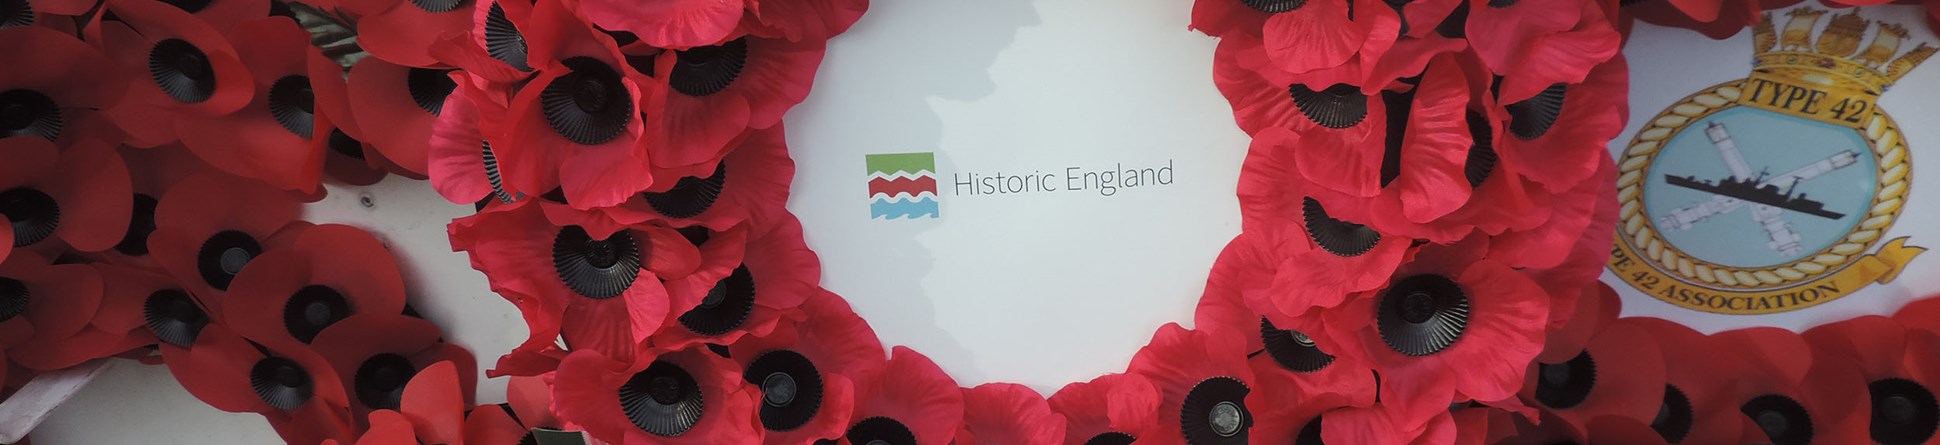 Historic England poppy wreath